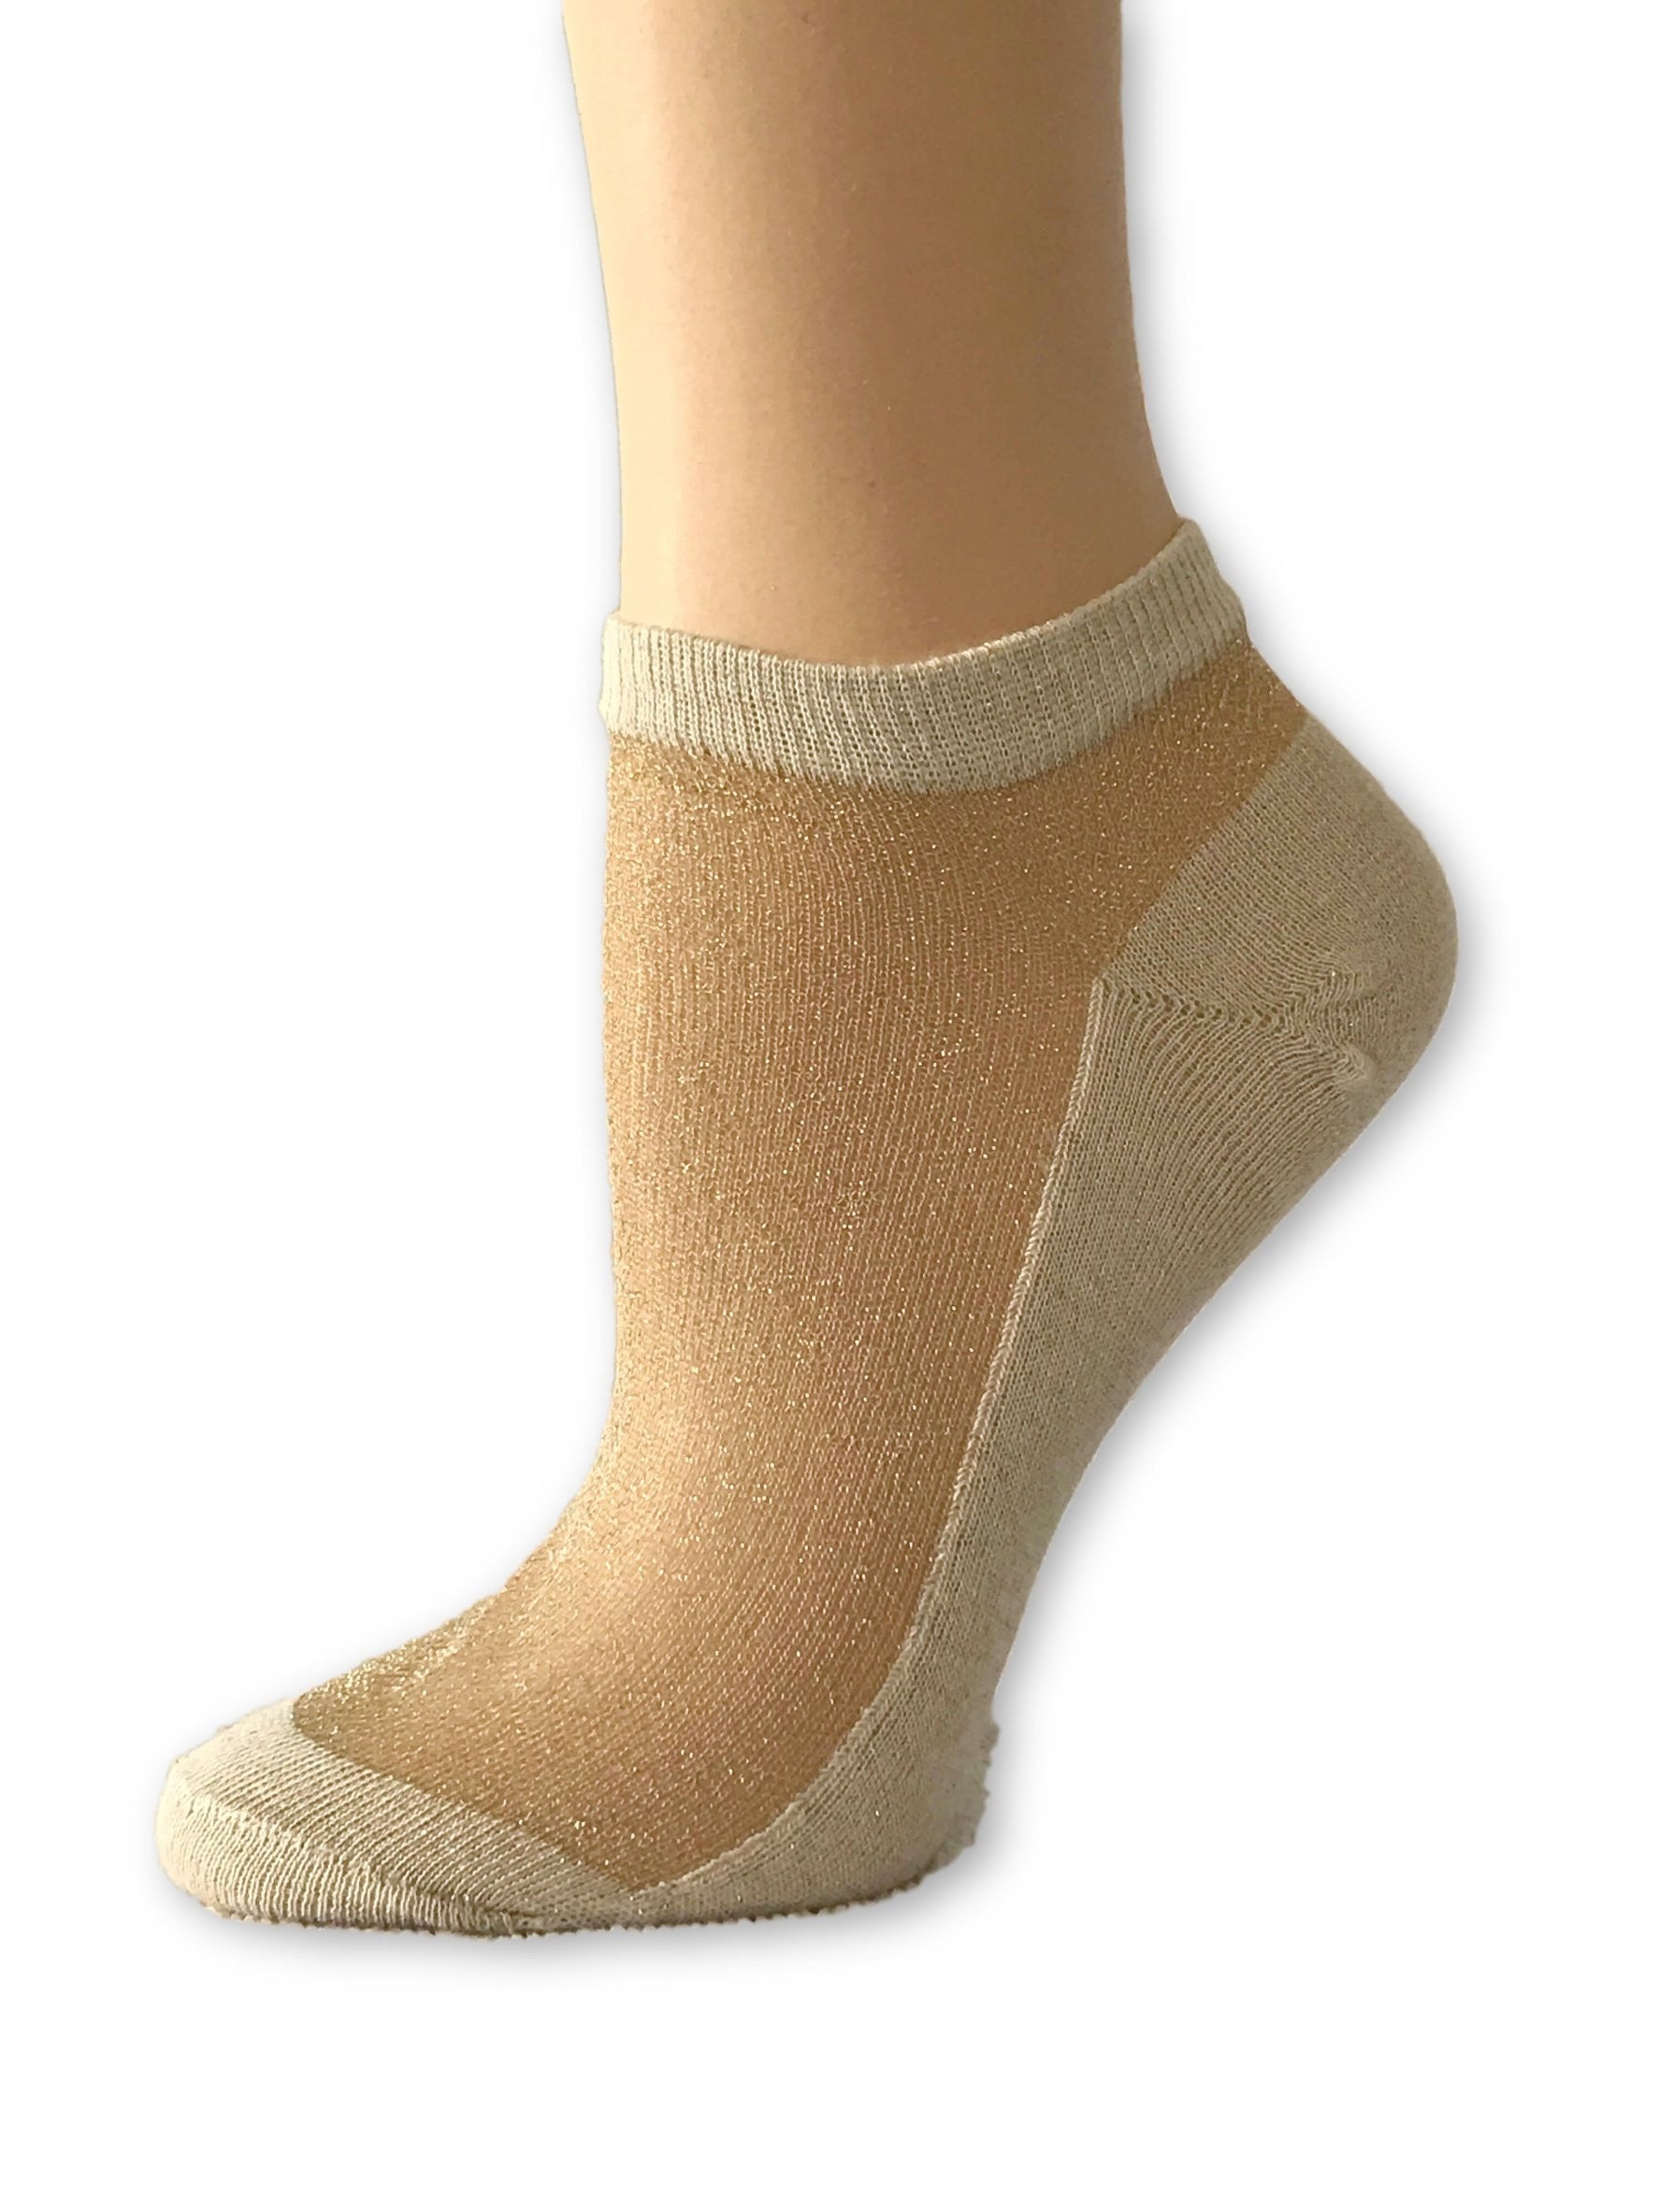 Glowing White Ankle Sheer Socks - Global Trendz Fashion®